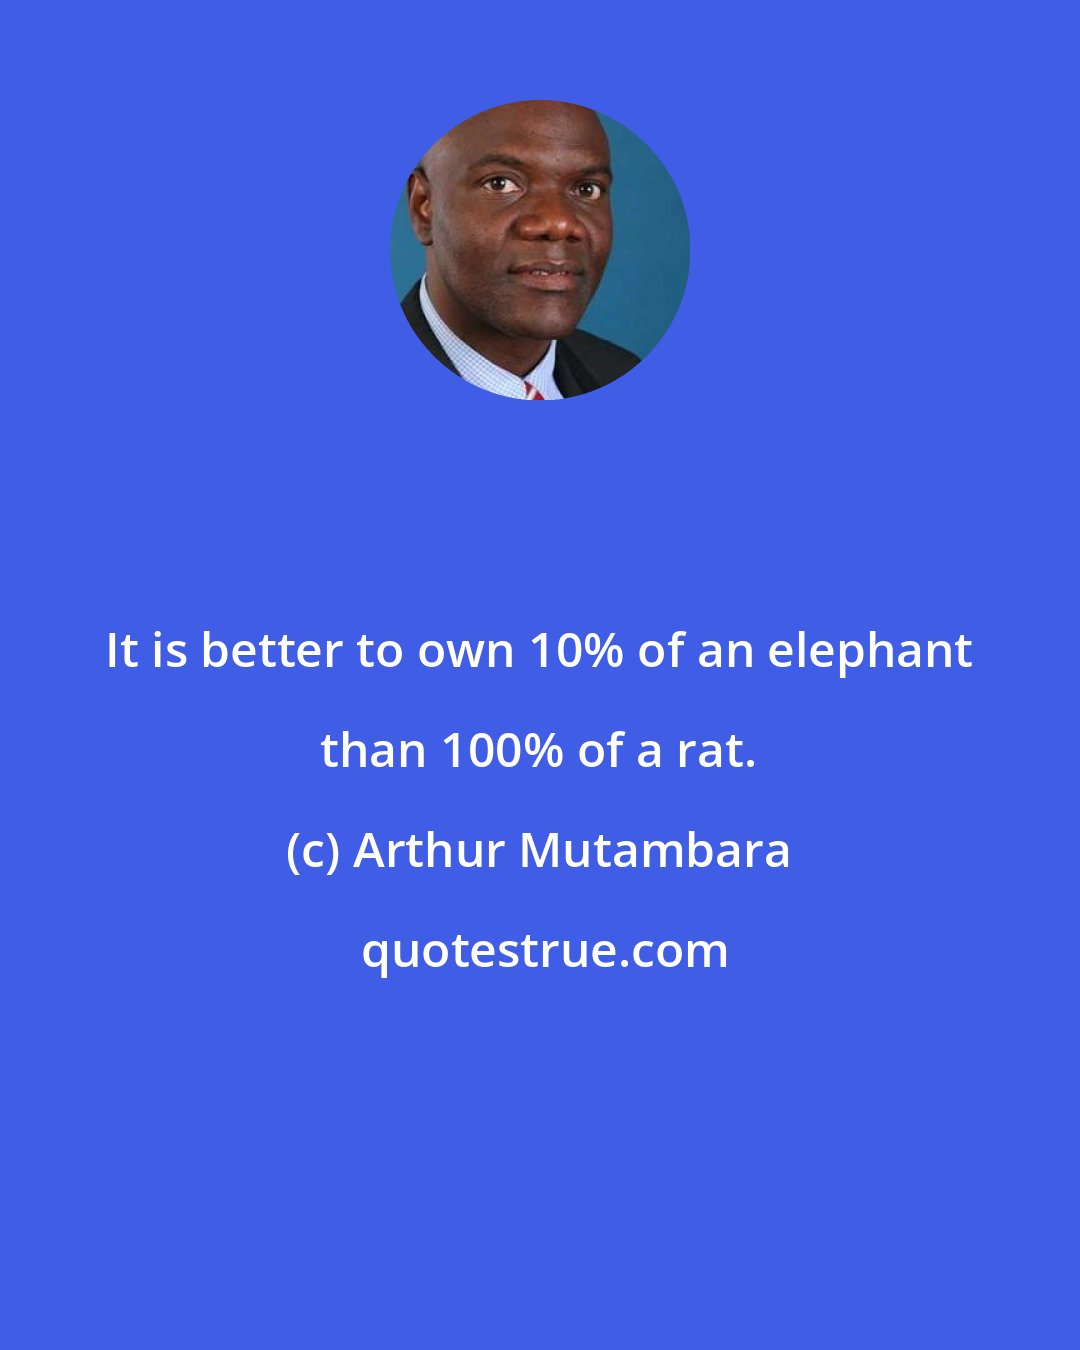 Arthur Mutambara: It is better to own 10% of an elephant than 100% of a rat.